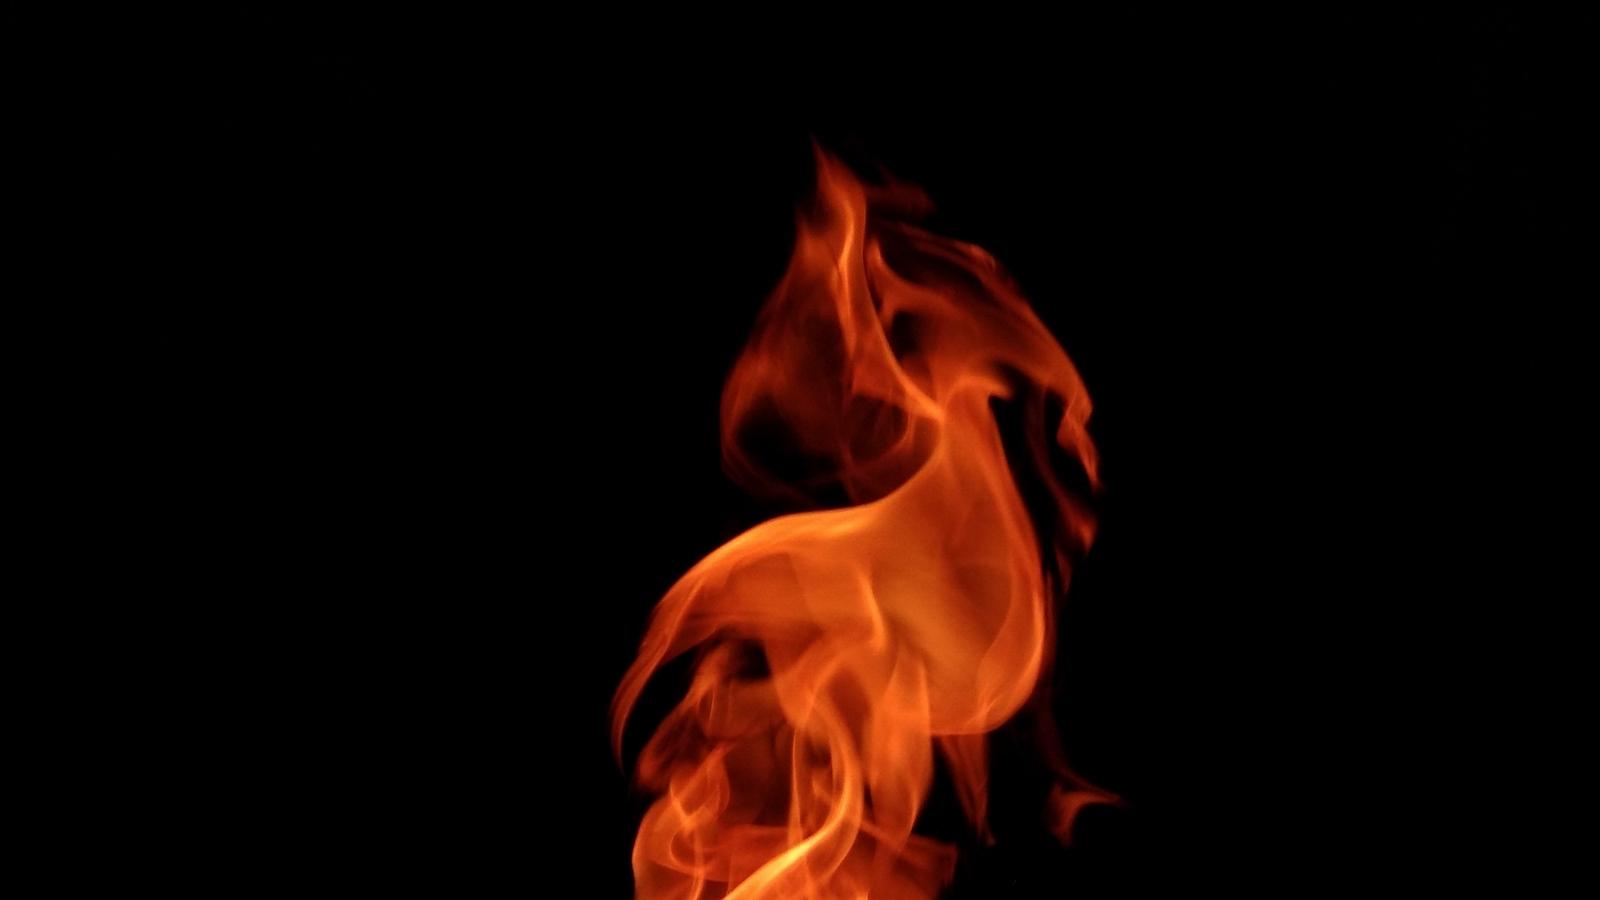 Download wallpaper 1600x900 fire, flame, dark, darkness